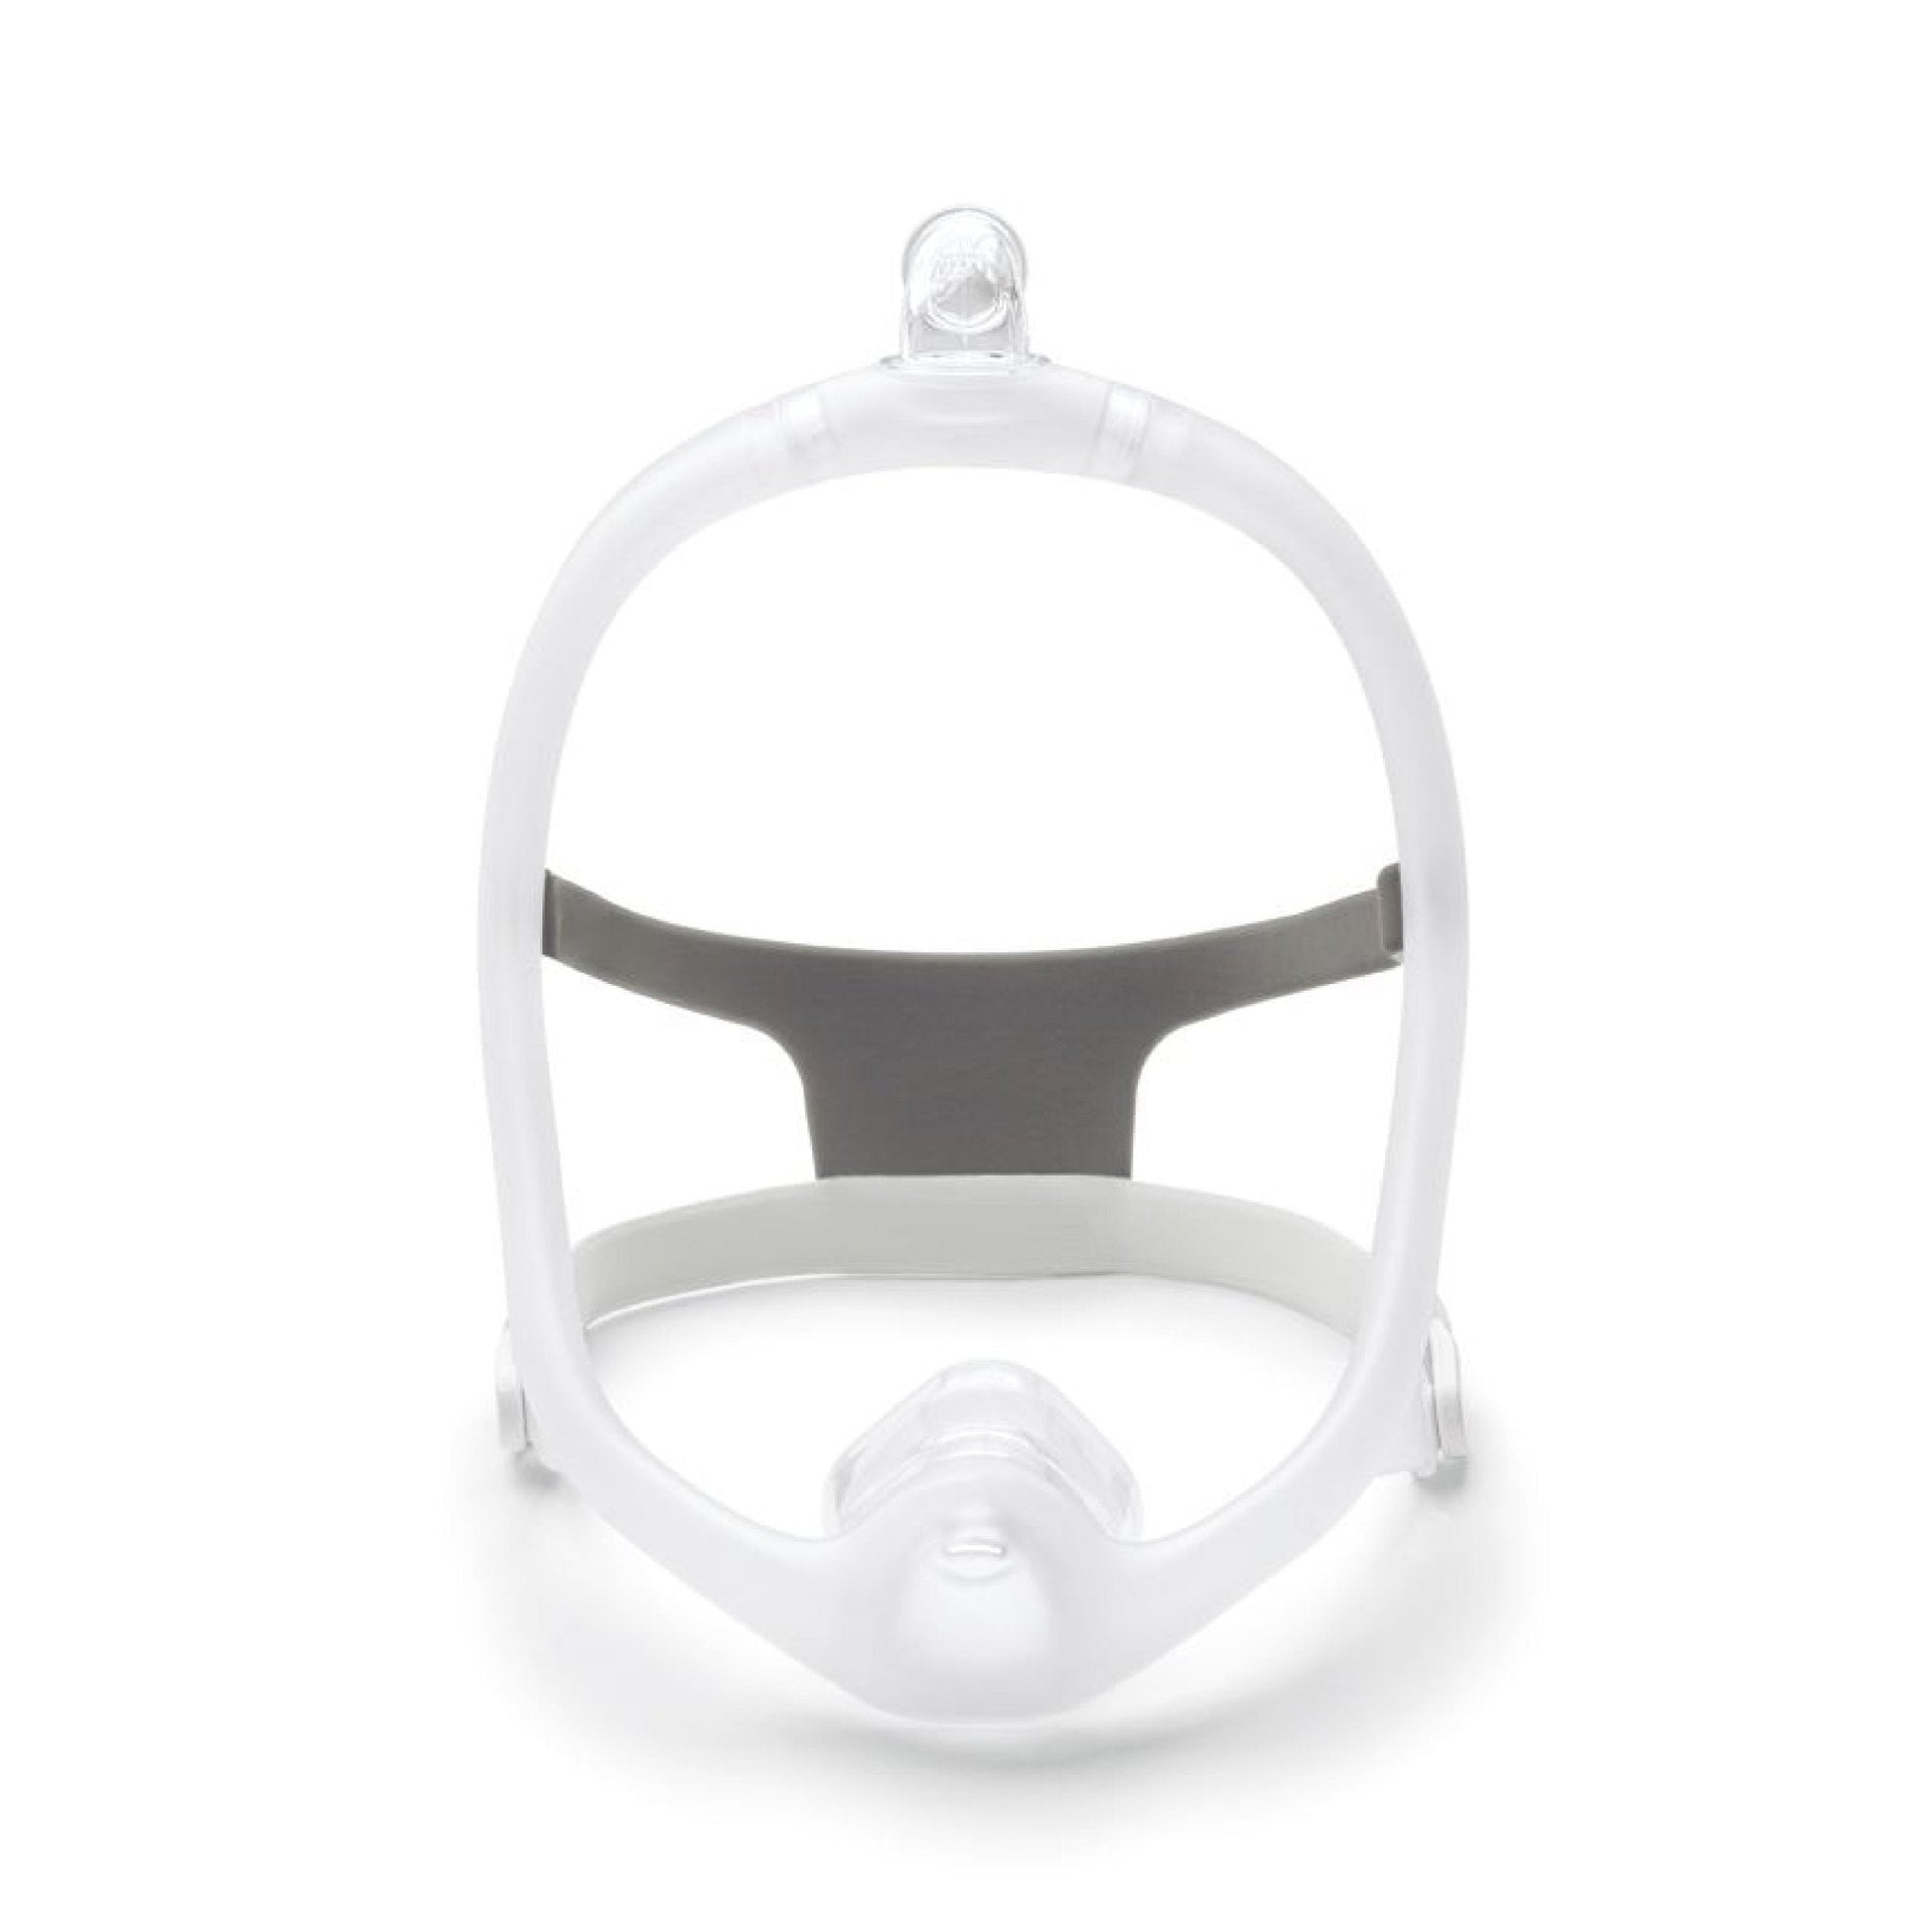 Philips Respironics DreamWisp Nasal CPAP Mask - resplabs